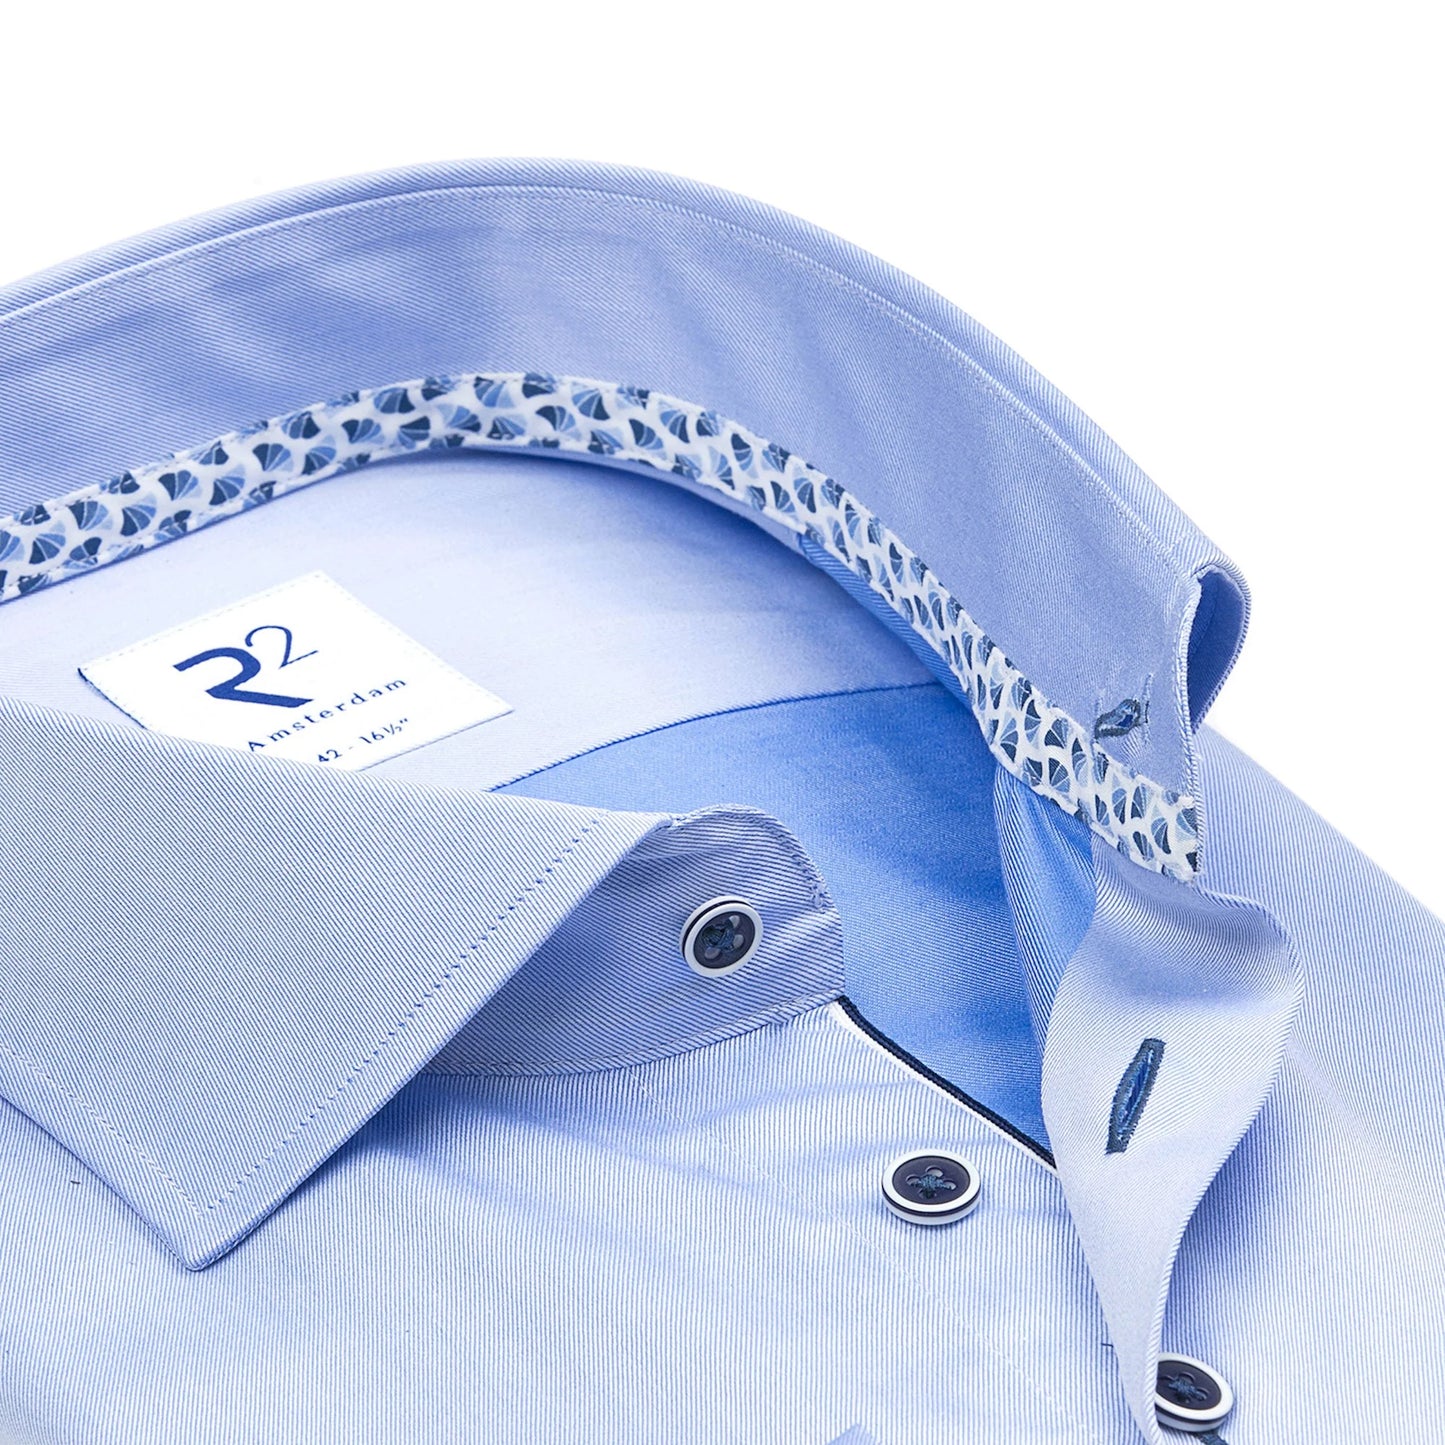 2-Ply Organic Cotton Shirts - Light Blue - Blue Buttons